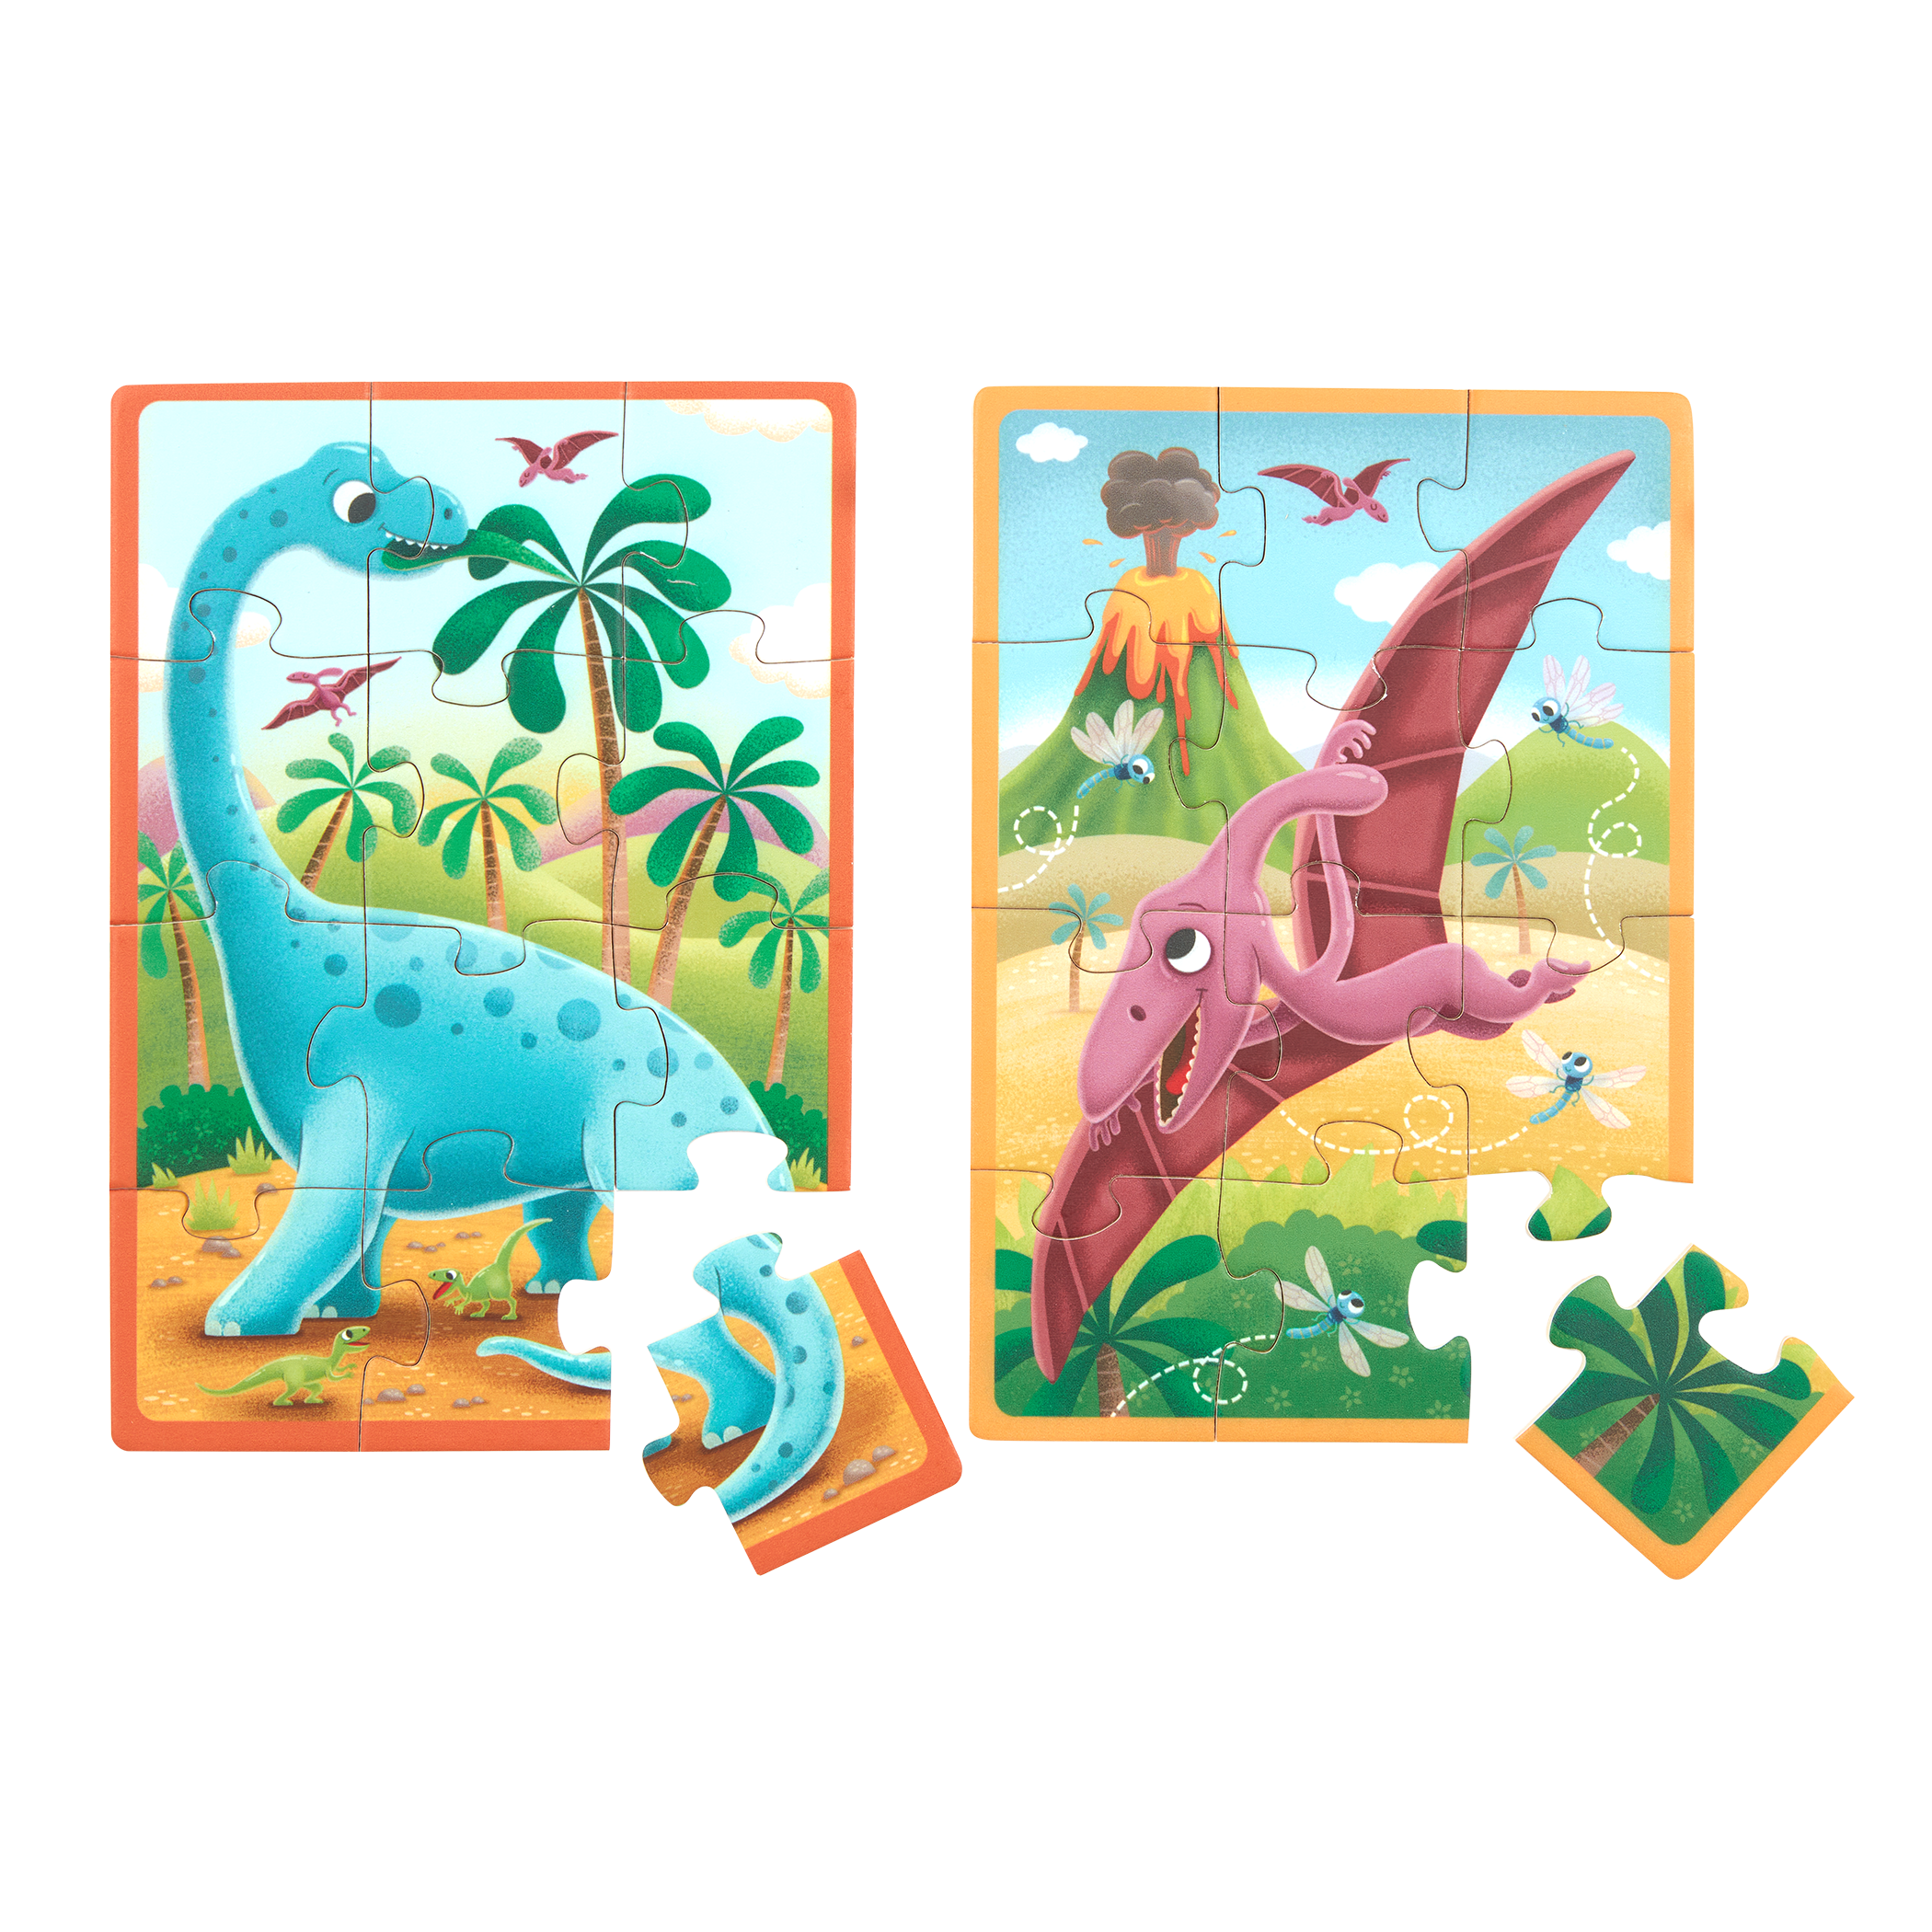 Dinosaur jigsaw puzzles.